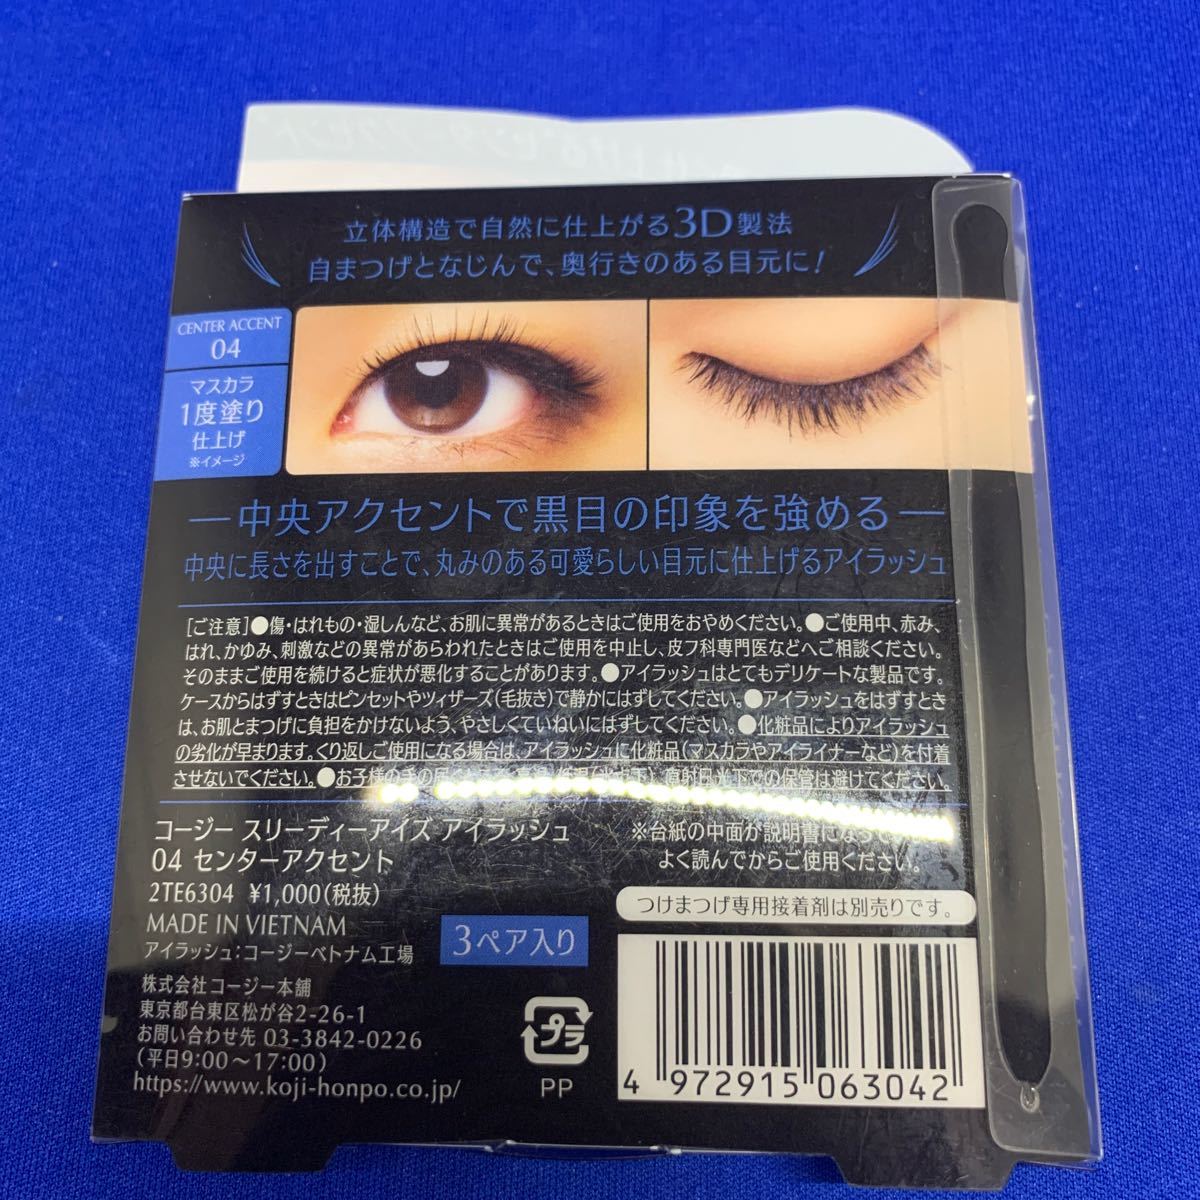 A0432 cozy 3D EYES eyelashes 04 center accent eyelashes extensions s Lee ti- I z eyelashes 3 pair entering 